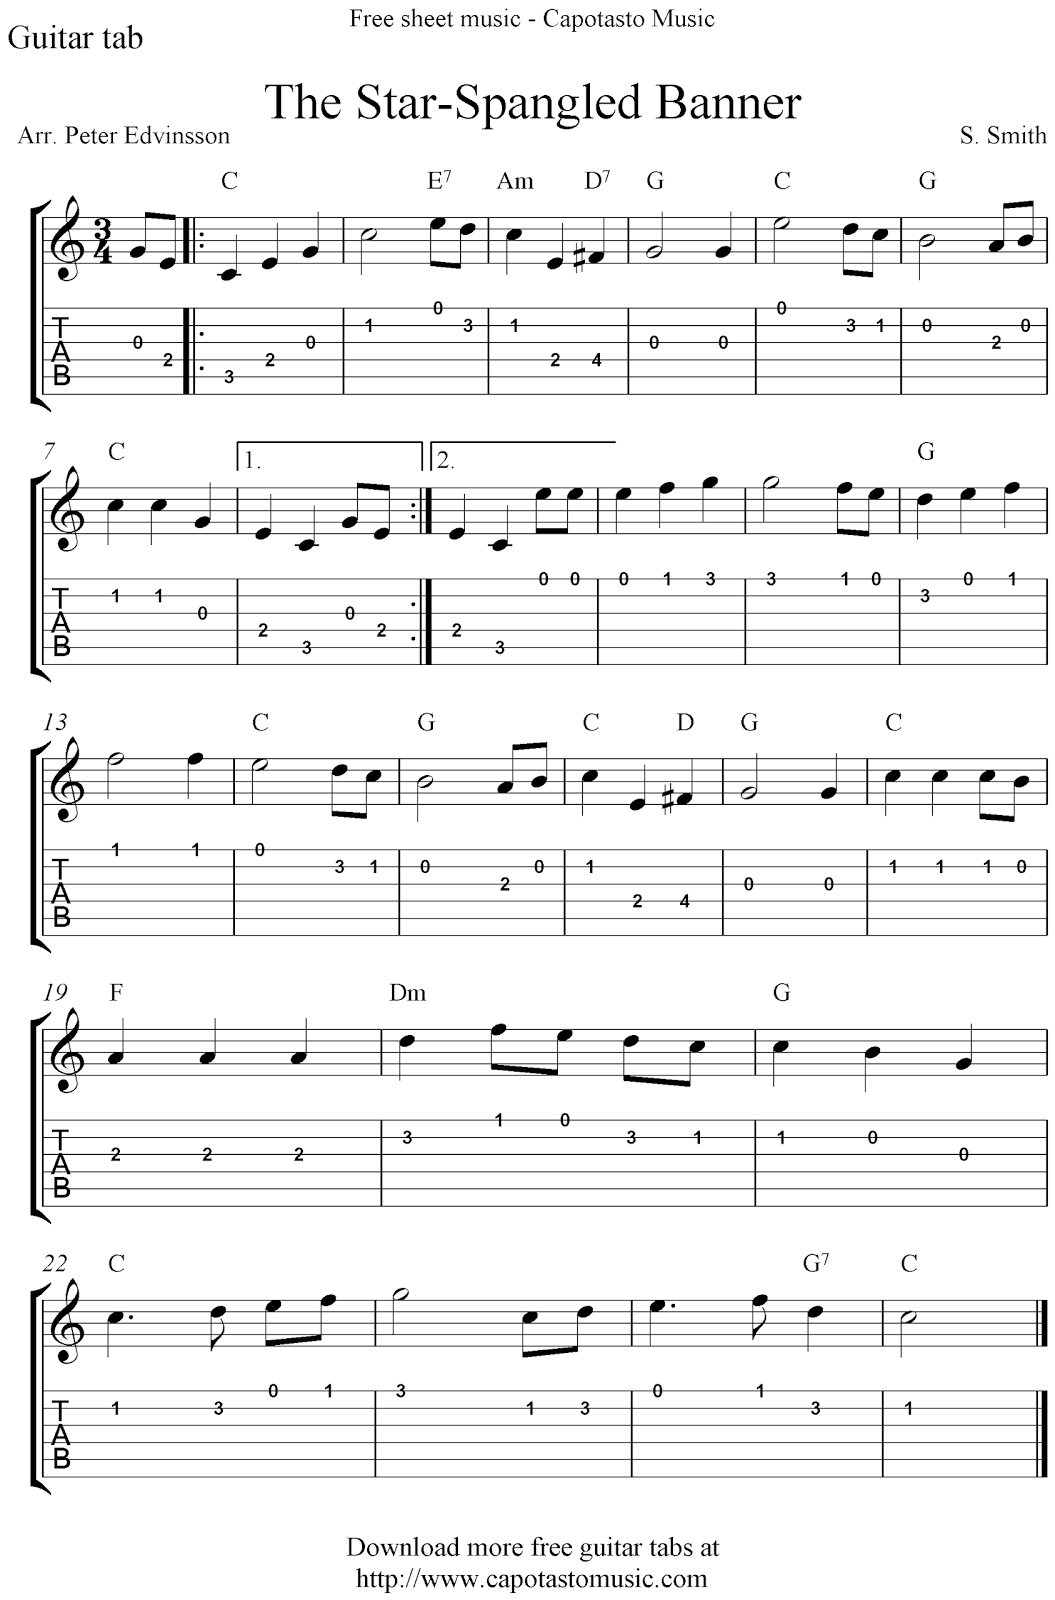 Free Sheet Music Scores: The Star-Spangled Banner, Free Guitar - Free Printable Guitar Music